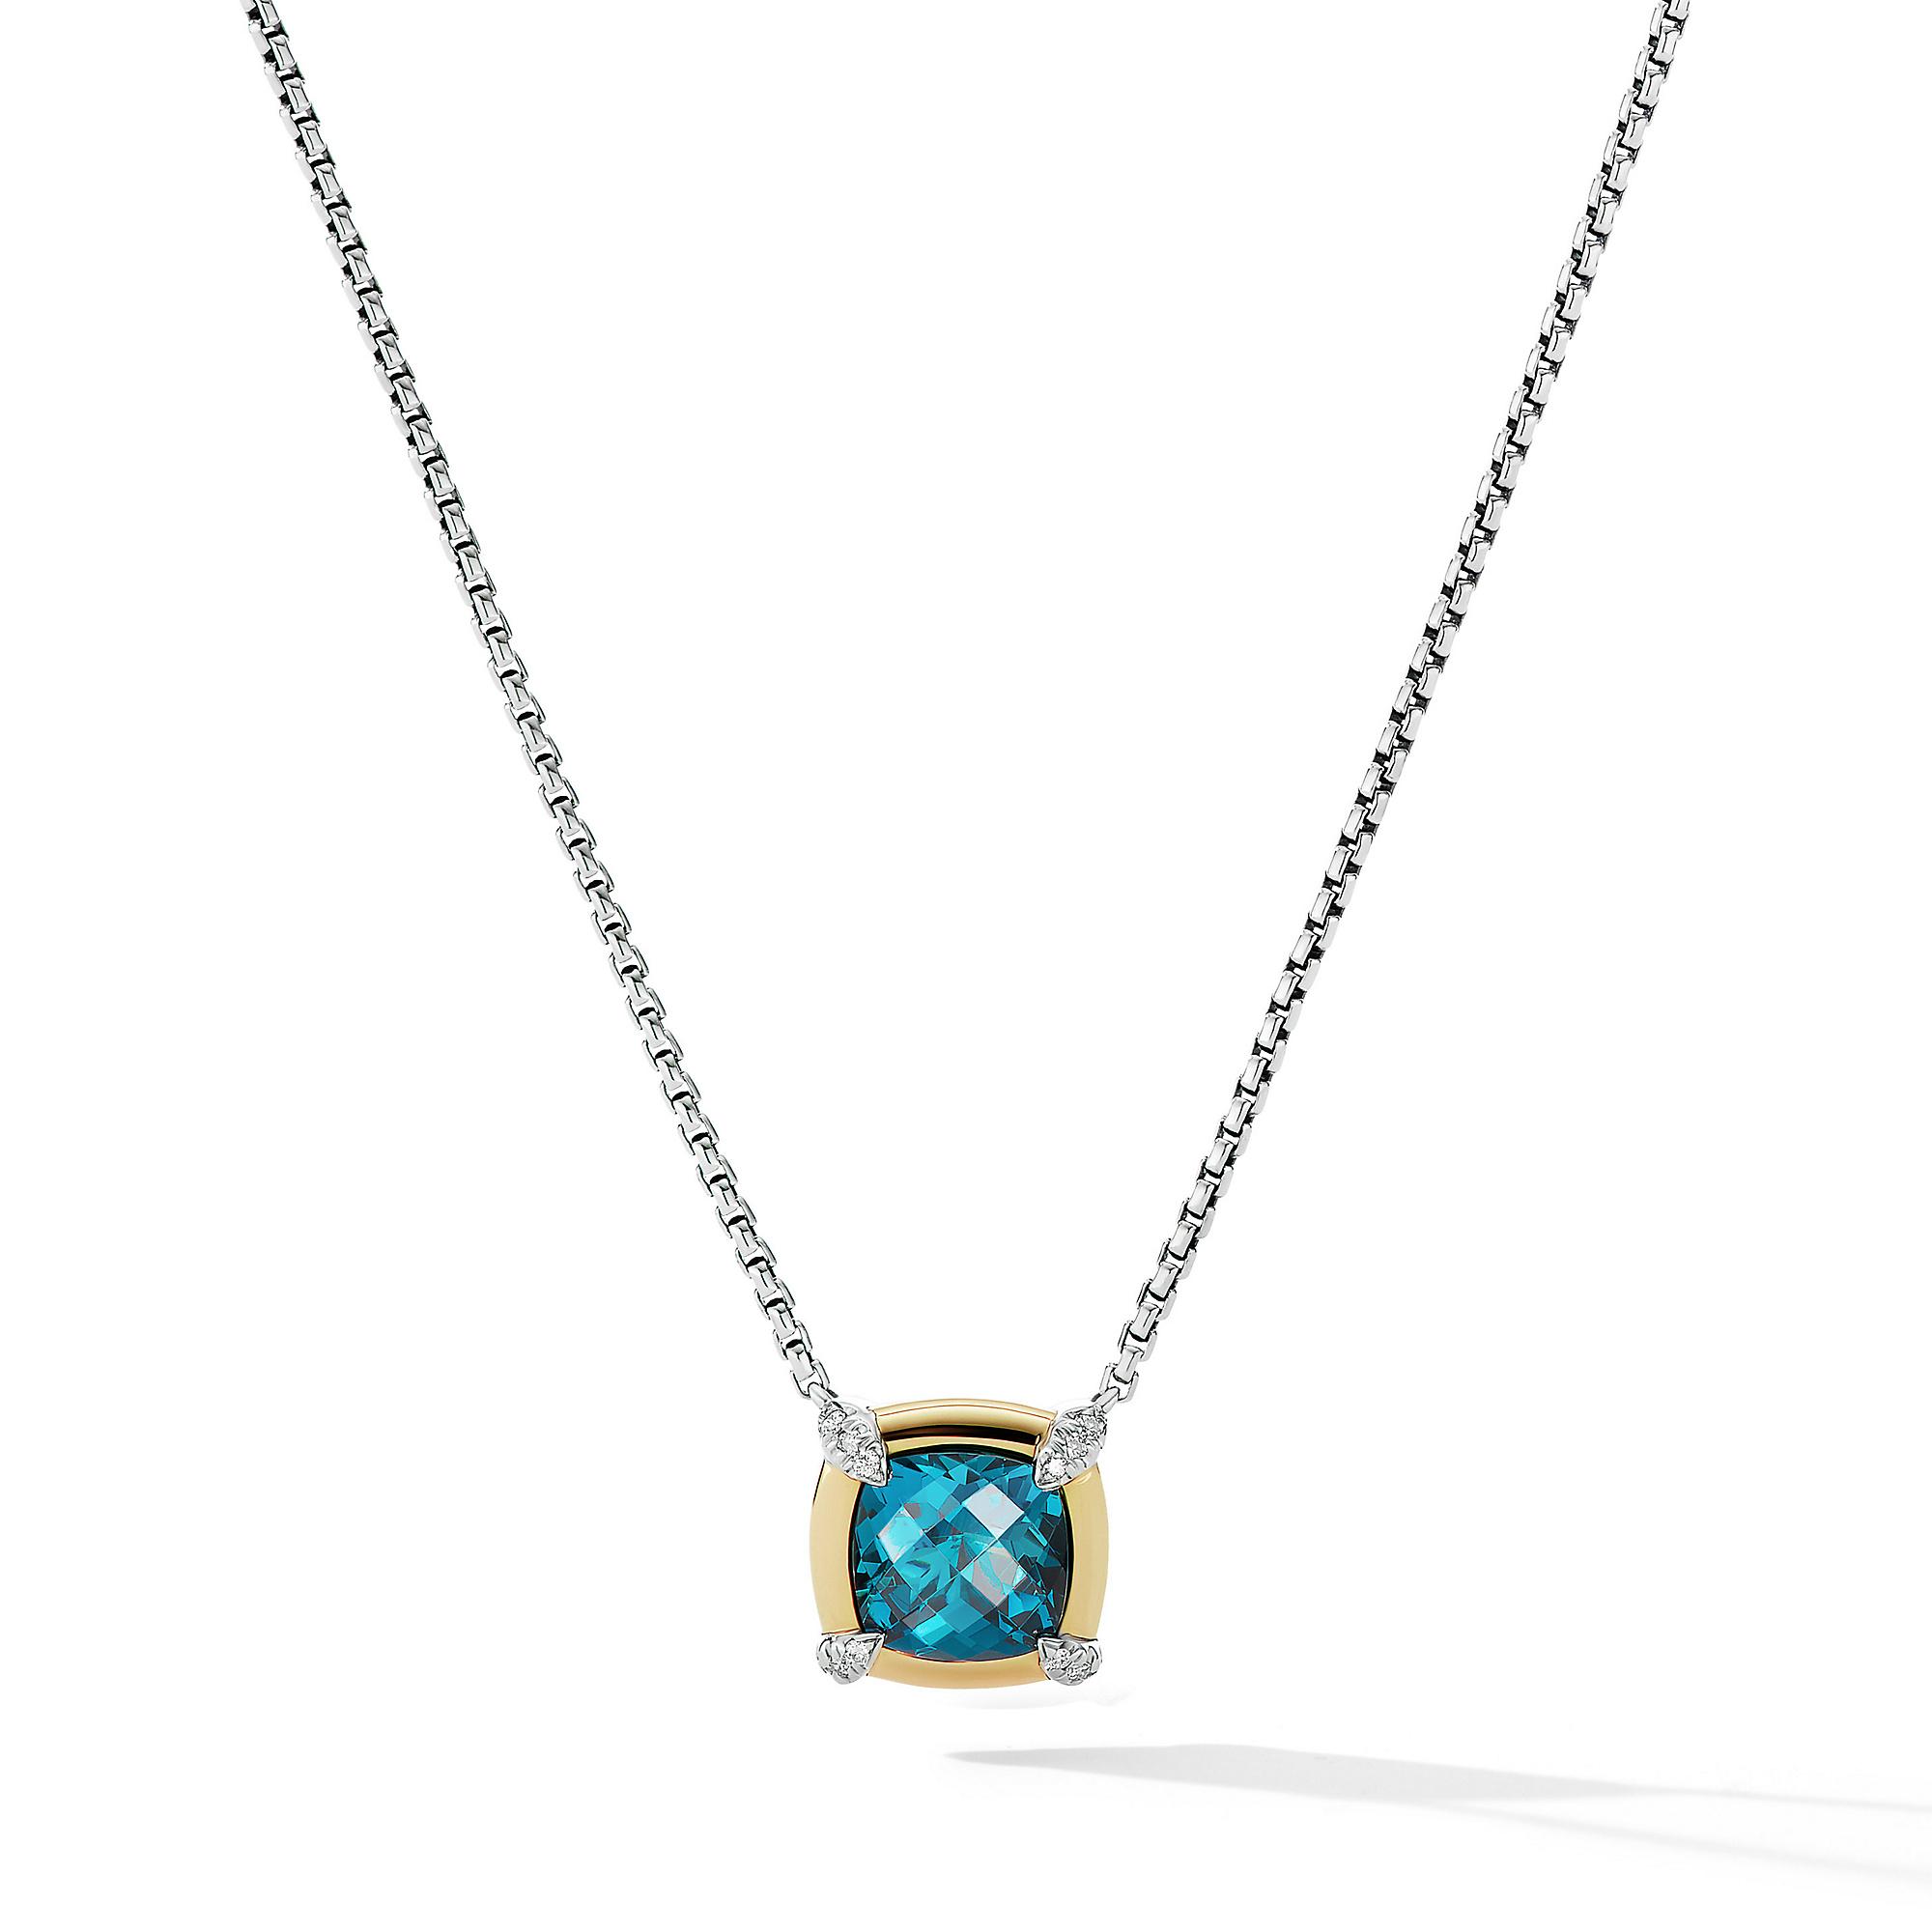 David Yurman Petite Chatelaine Pendant Necklace with Hampton Blue Topaz, 18k Yellow Gold Bezel and Pave Diamonds